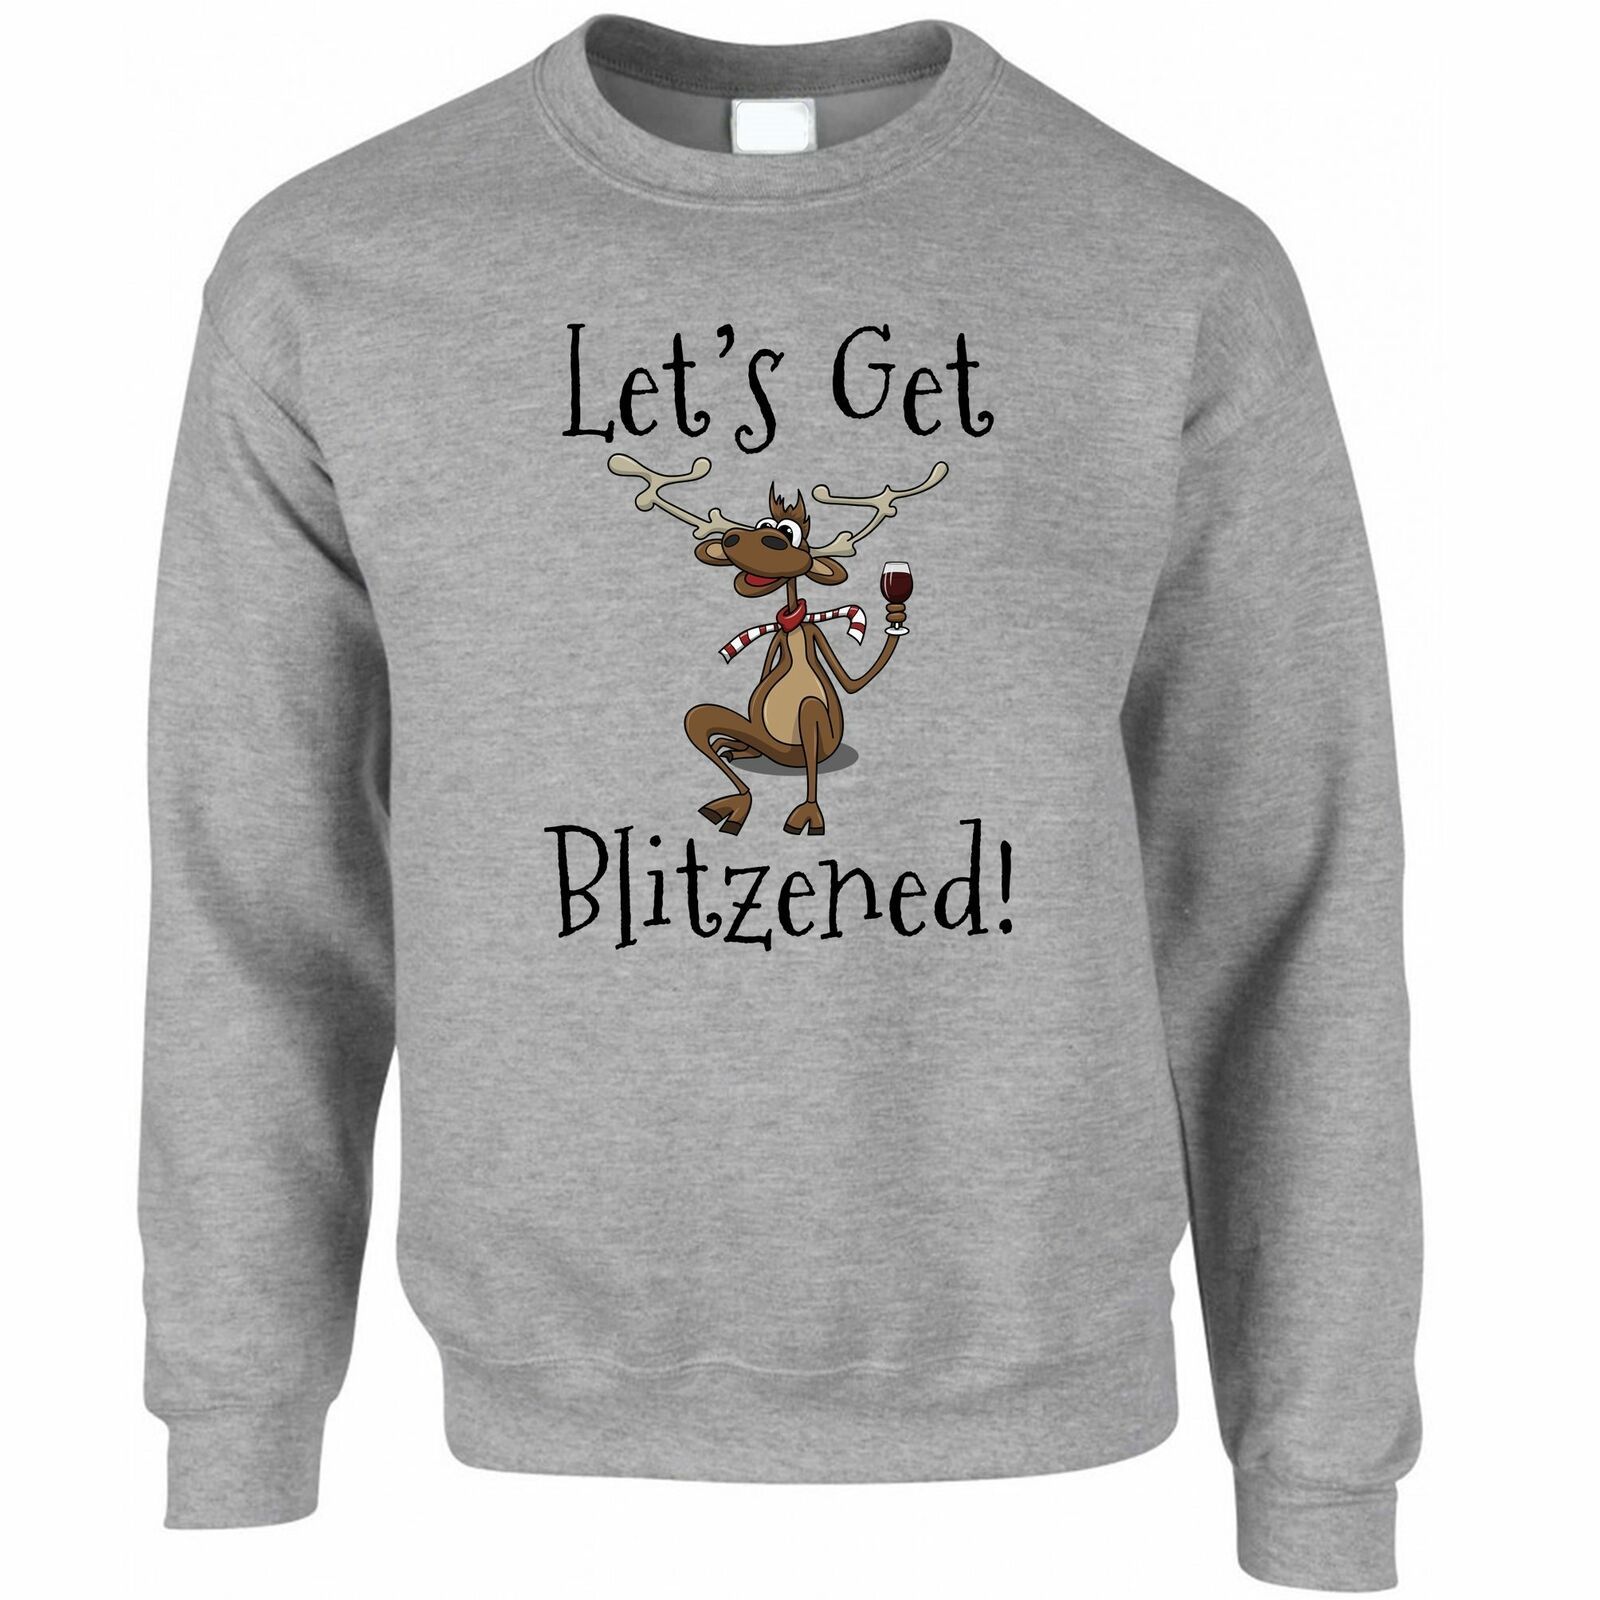 Let's Get Blitzened Christmas sweatshirt Style: Sweatshirt, Color: Grey